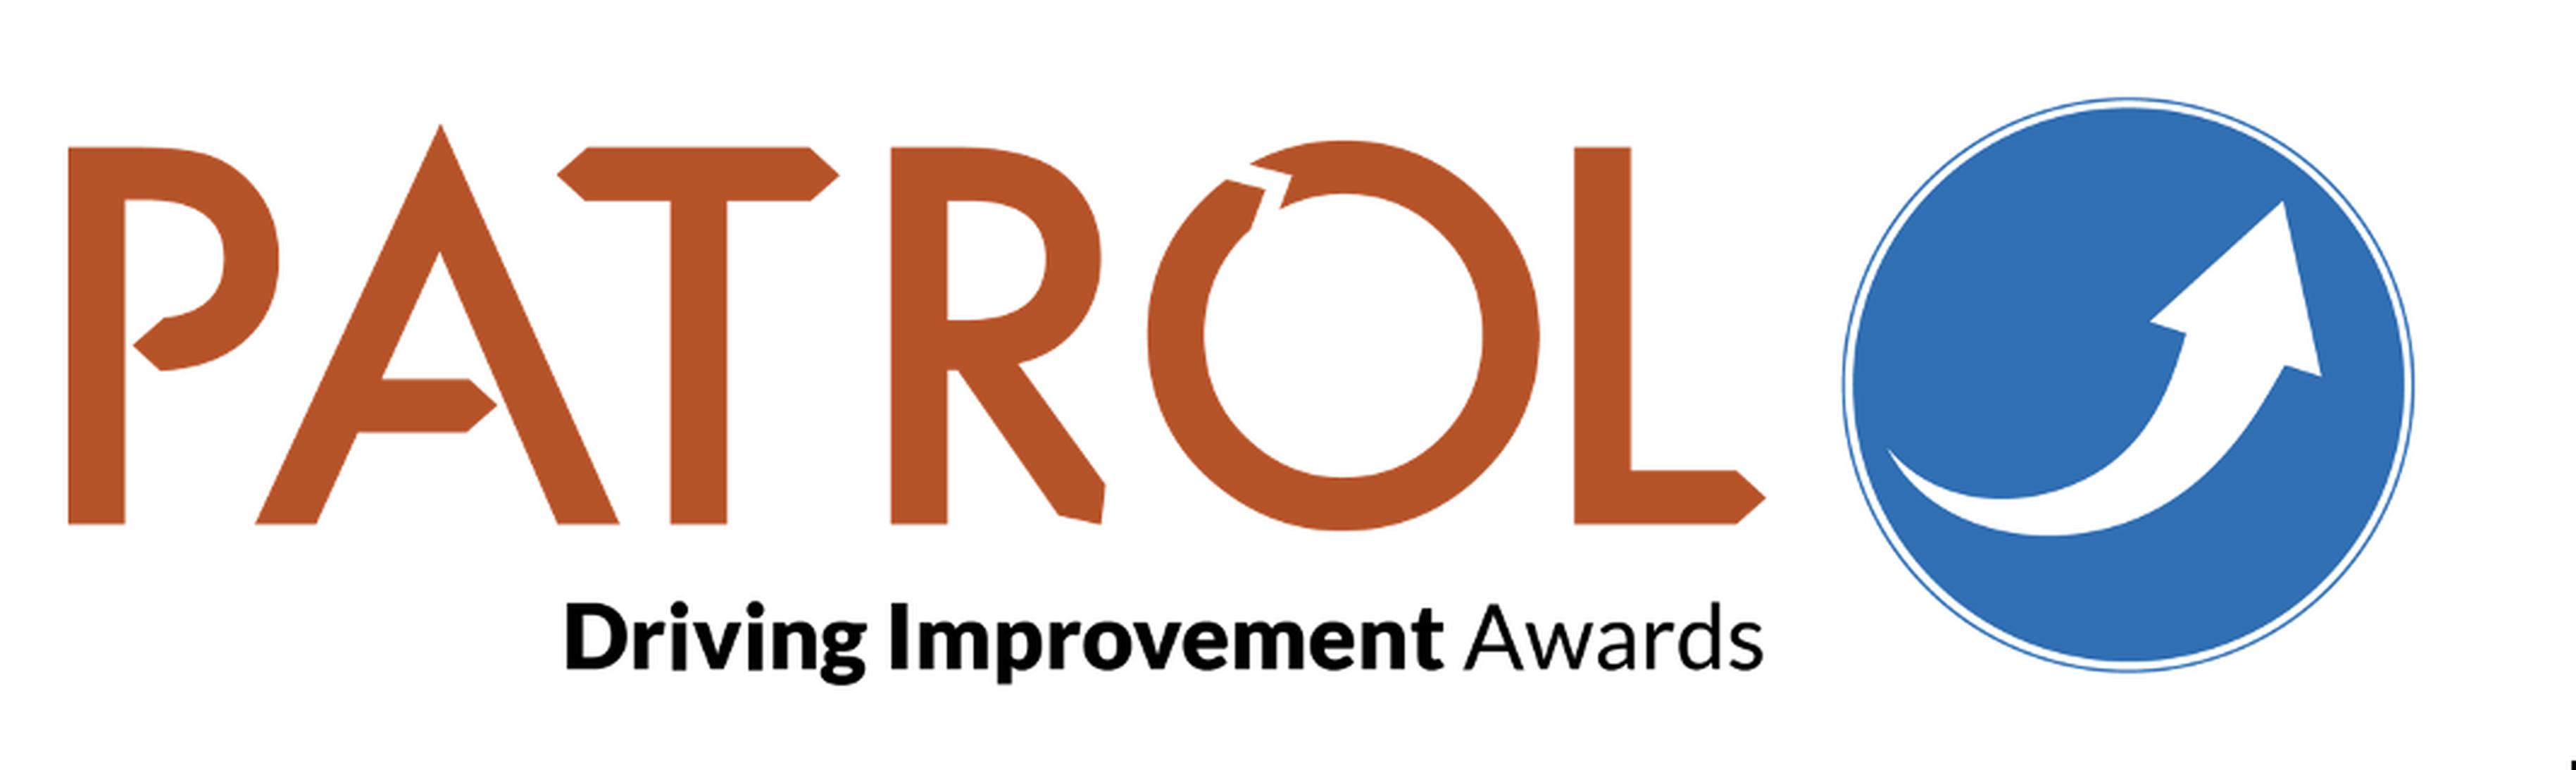 PATROL launches new Driving Improvement Award